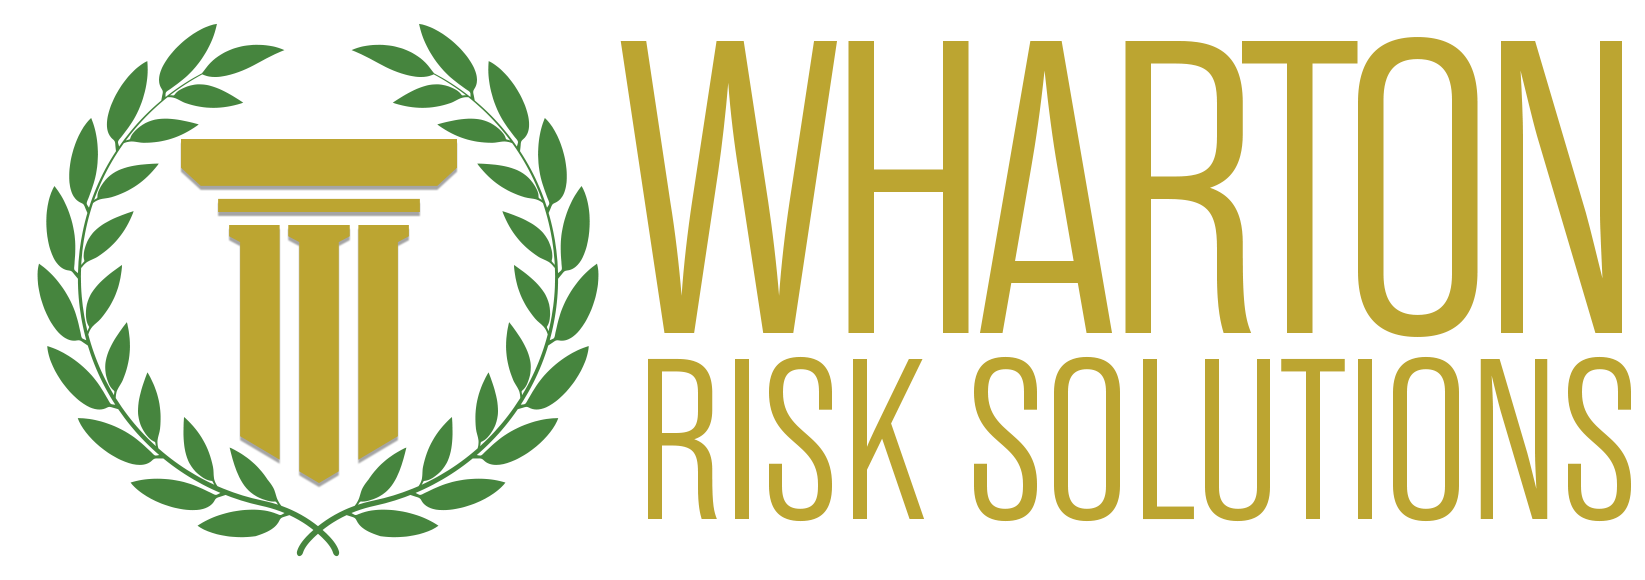 Wharton Risk Solutions